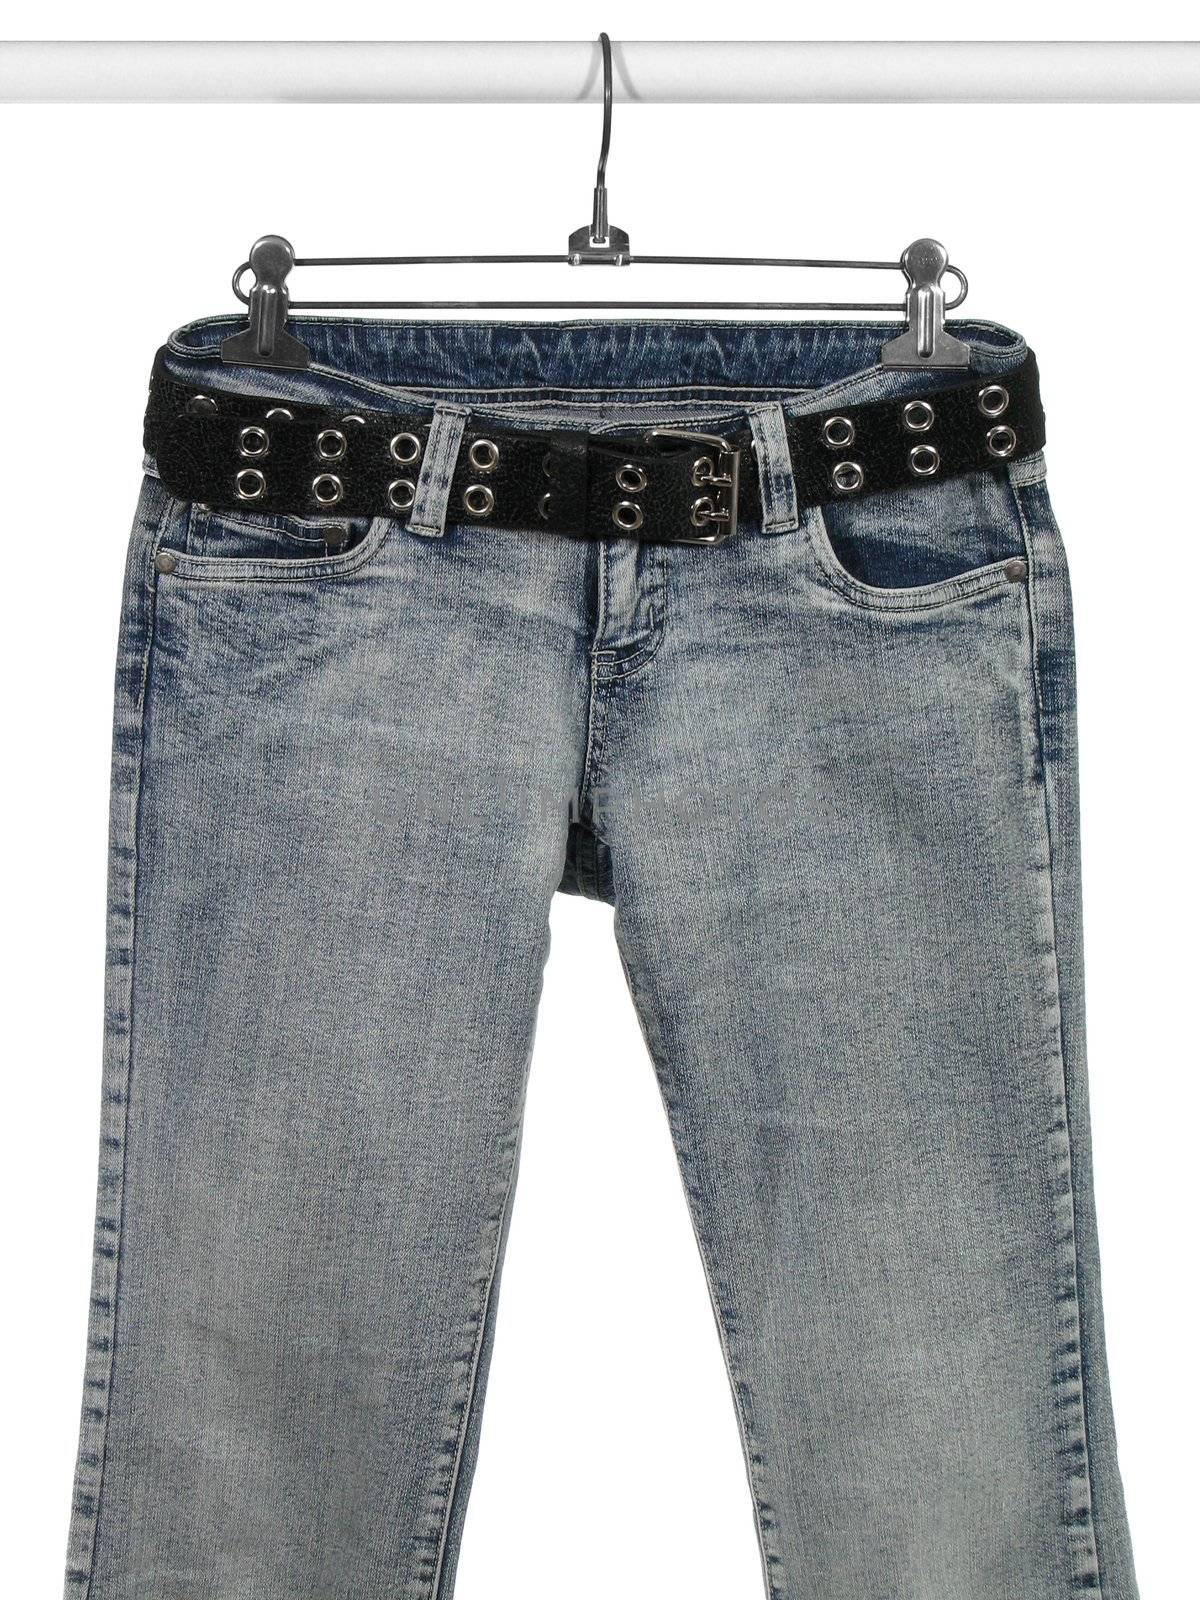 Blue jeans, black leather belt by anikasalsera